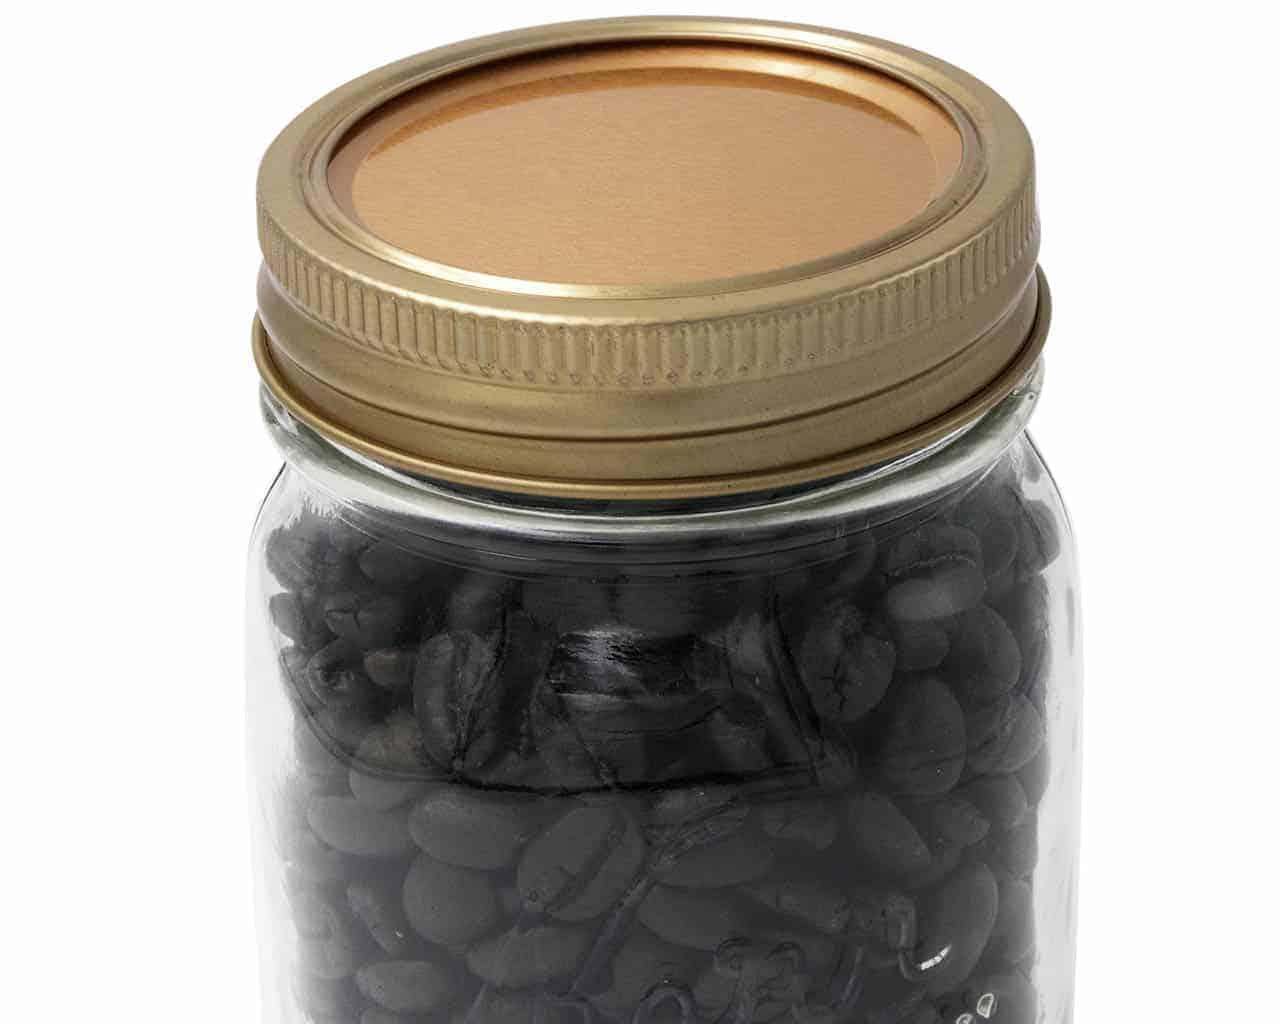 mason-jar-lifestyle-copper-flat-storage-lid-insert-and-band-regular-mouth-kerr-mason-pint-jar-coffee-beans